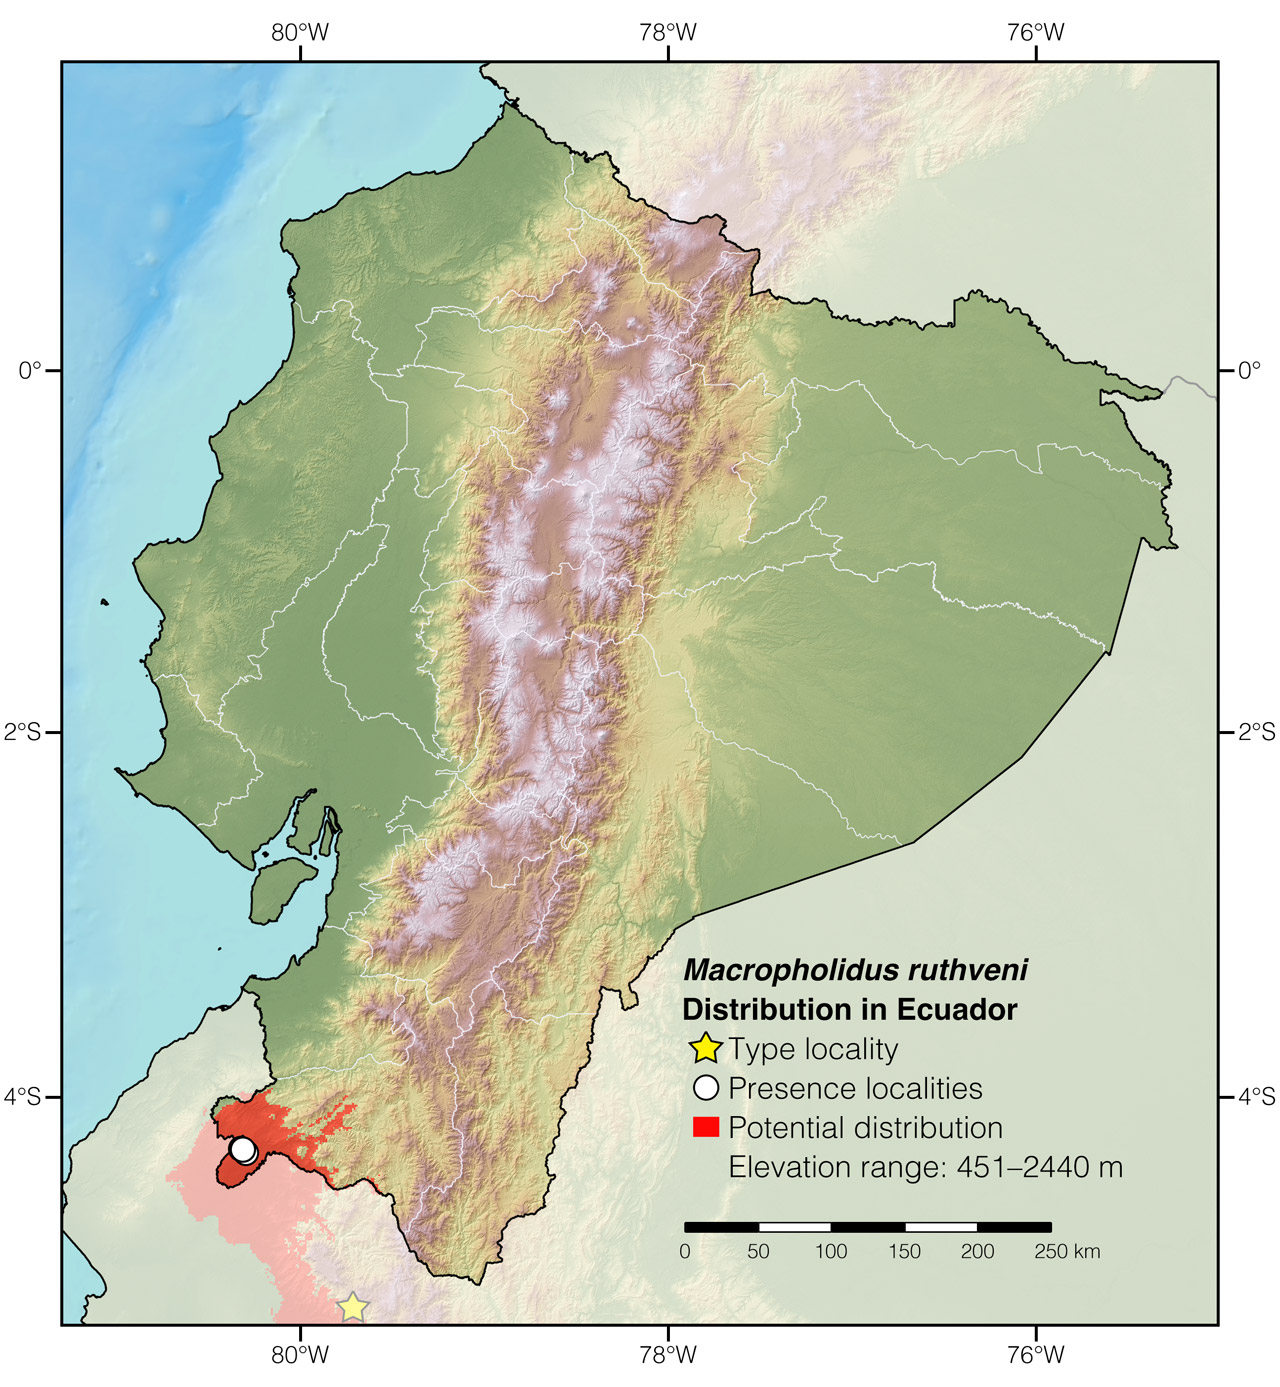 Distribution of Macropholidus ruthveni in Ecuador